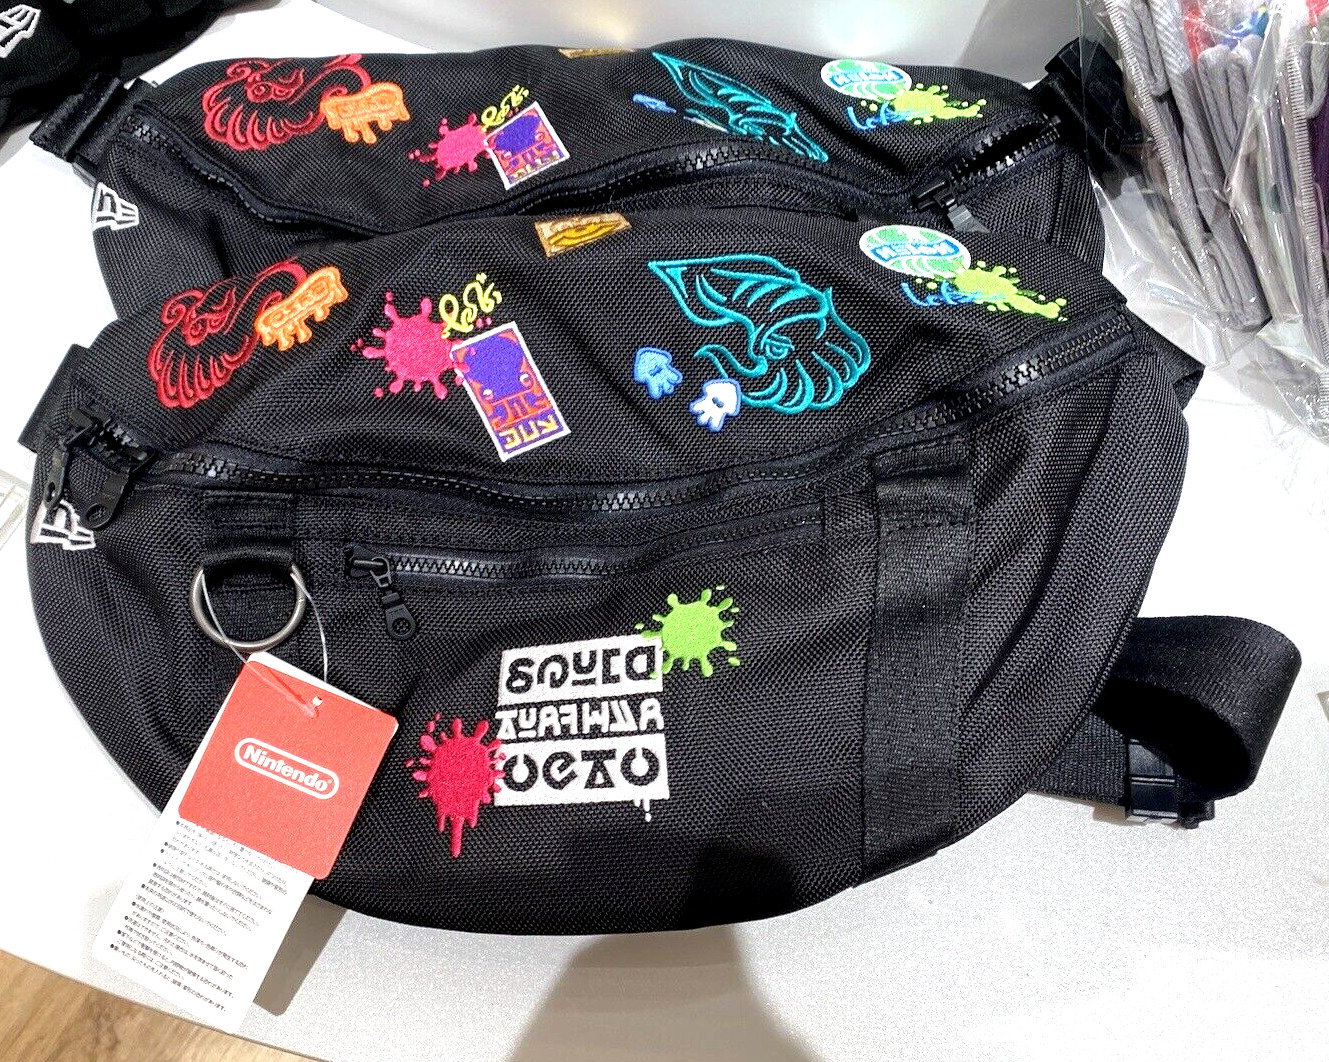 Splatoon Body Bag SQUID or OCTO Nintendo Tokyo/Osaka/Kyoto Exclsive by Ensky NEW